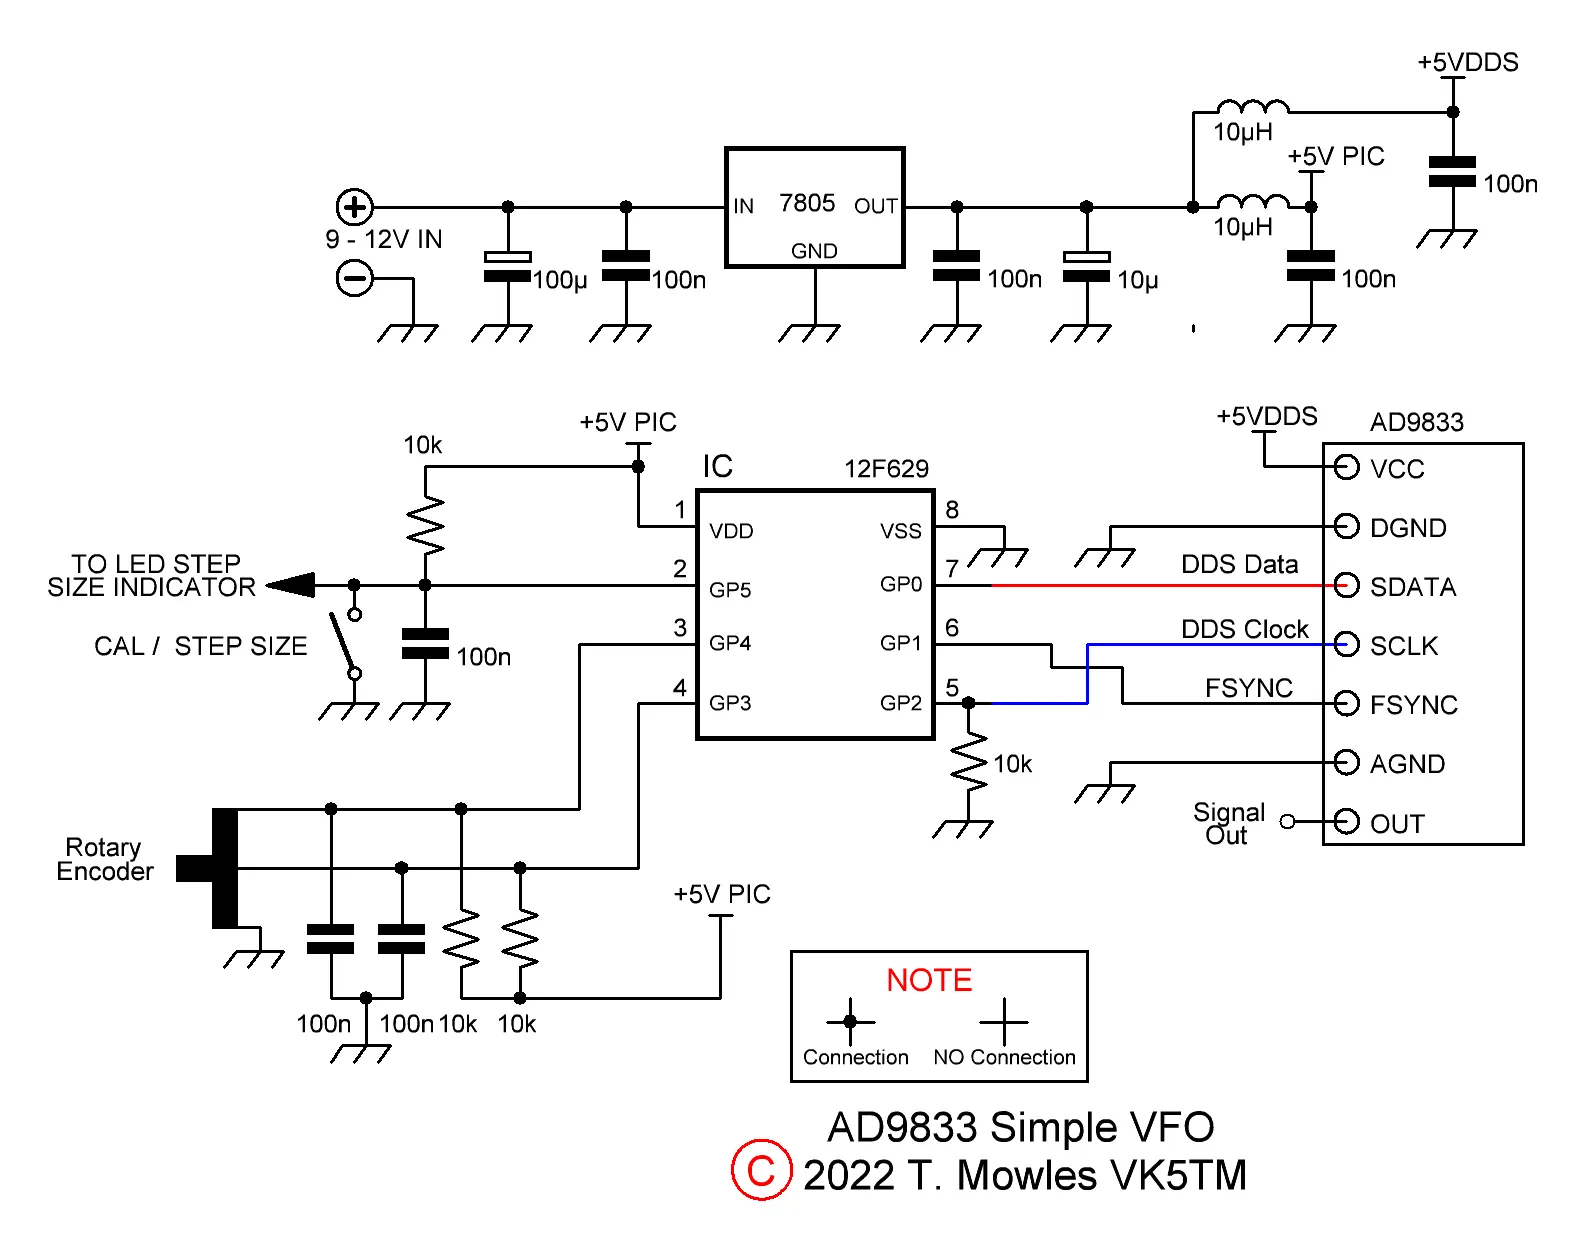 AD9833 DDS VFO schematic